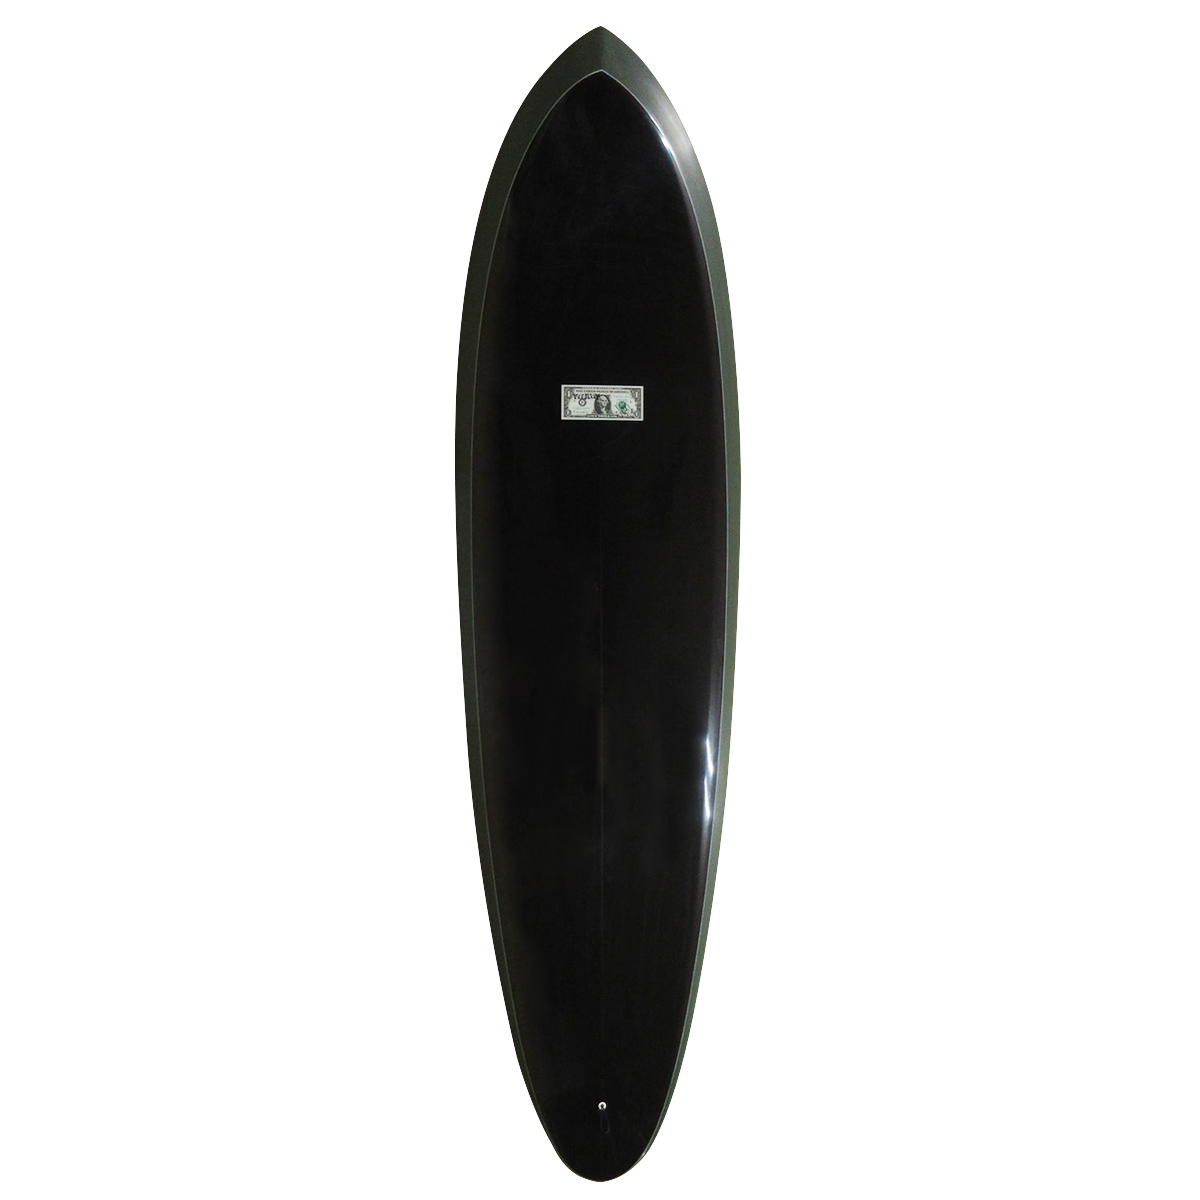 Mccallum Surfboards / SLIM 7`2 Shaped By Jeff Mccallum